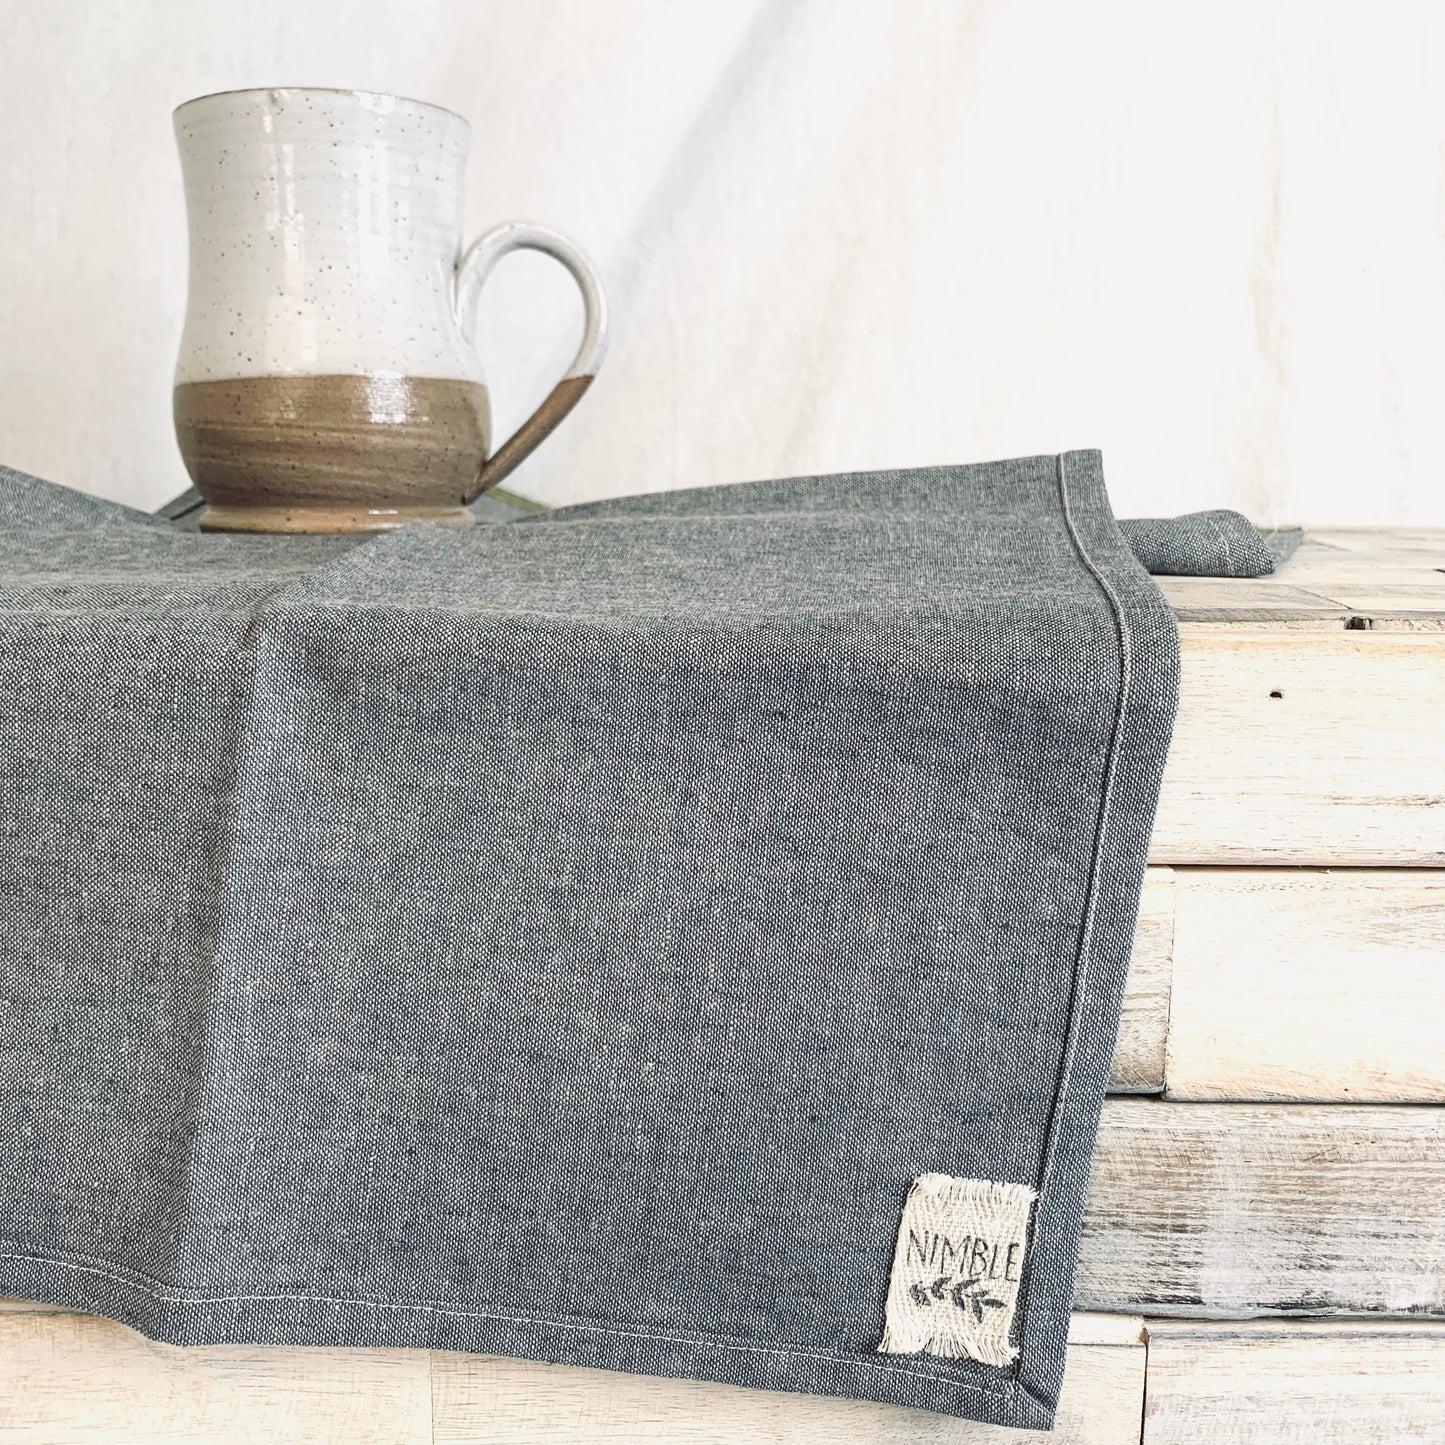 Tea towel, Cotton, Gray Denim, Small